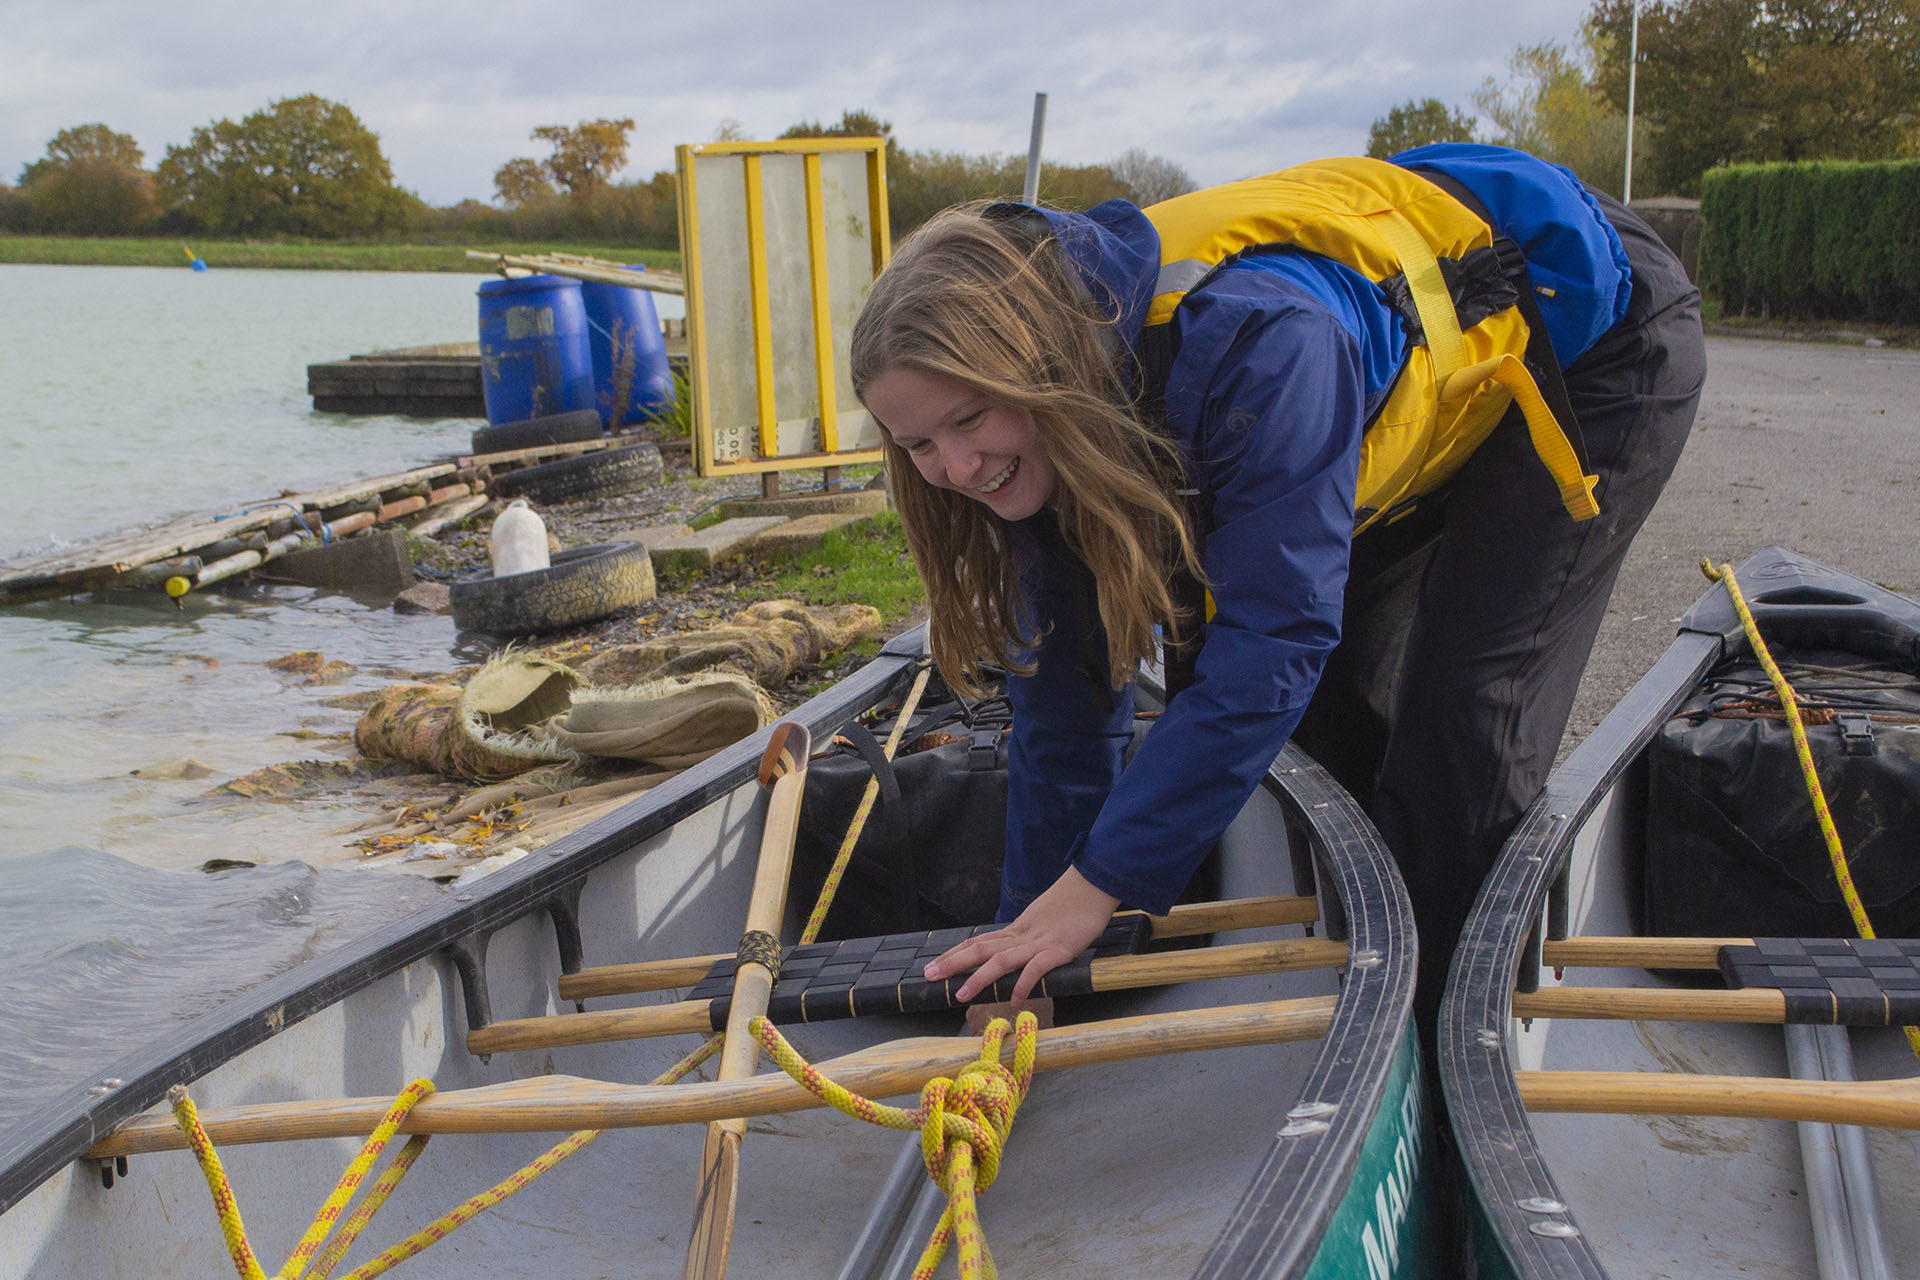 Outdoor Pursuits. Student preparing canoe